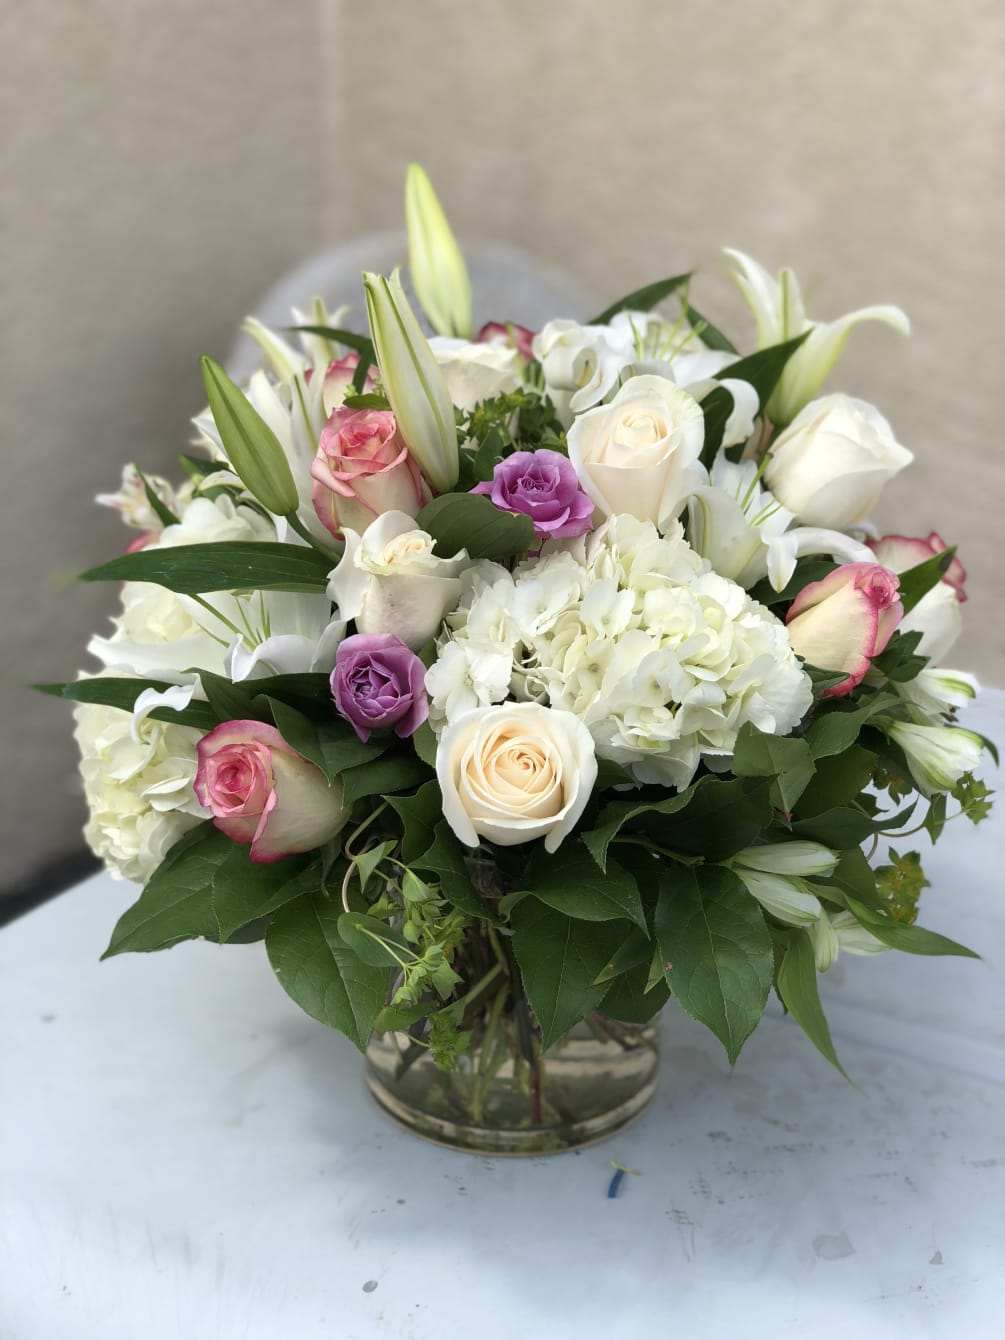 Beautiful floral arrangement for you love 